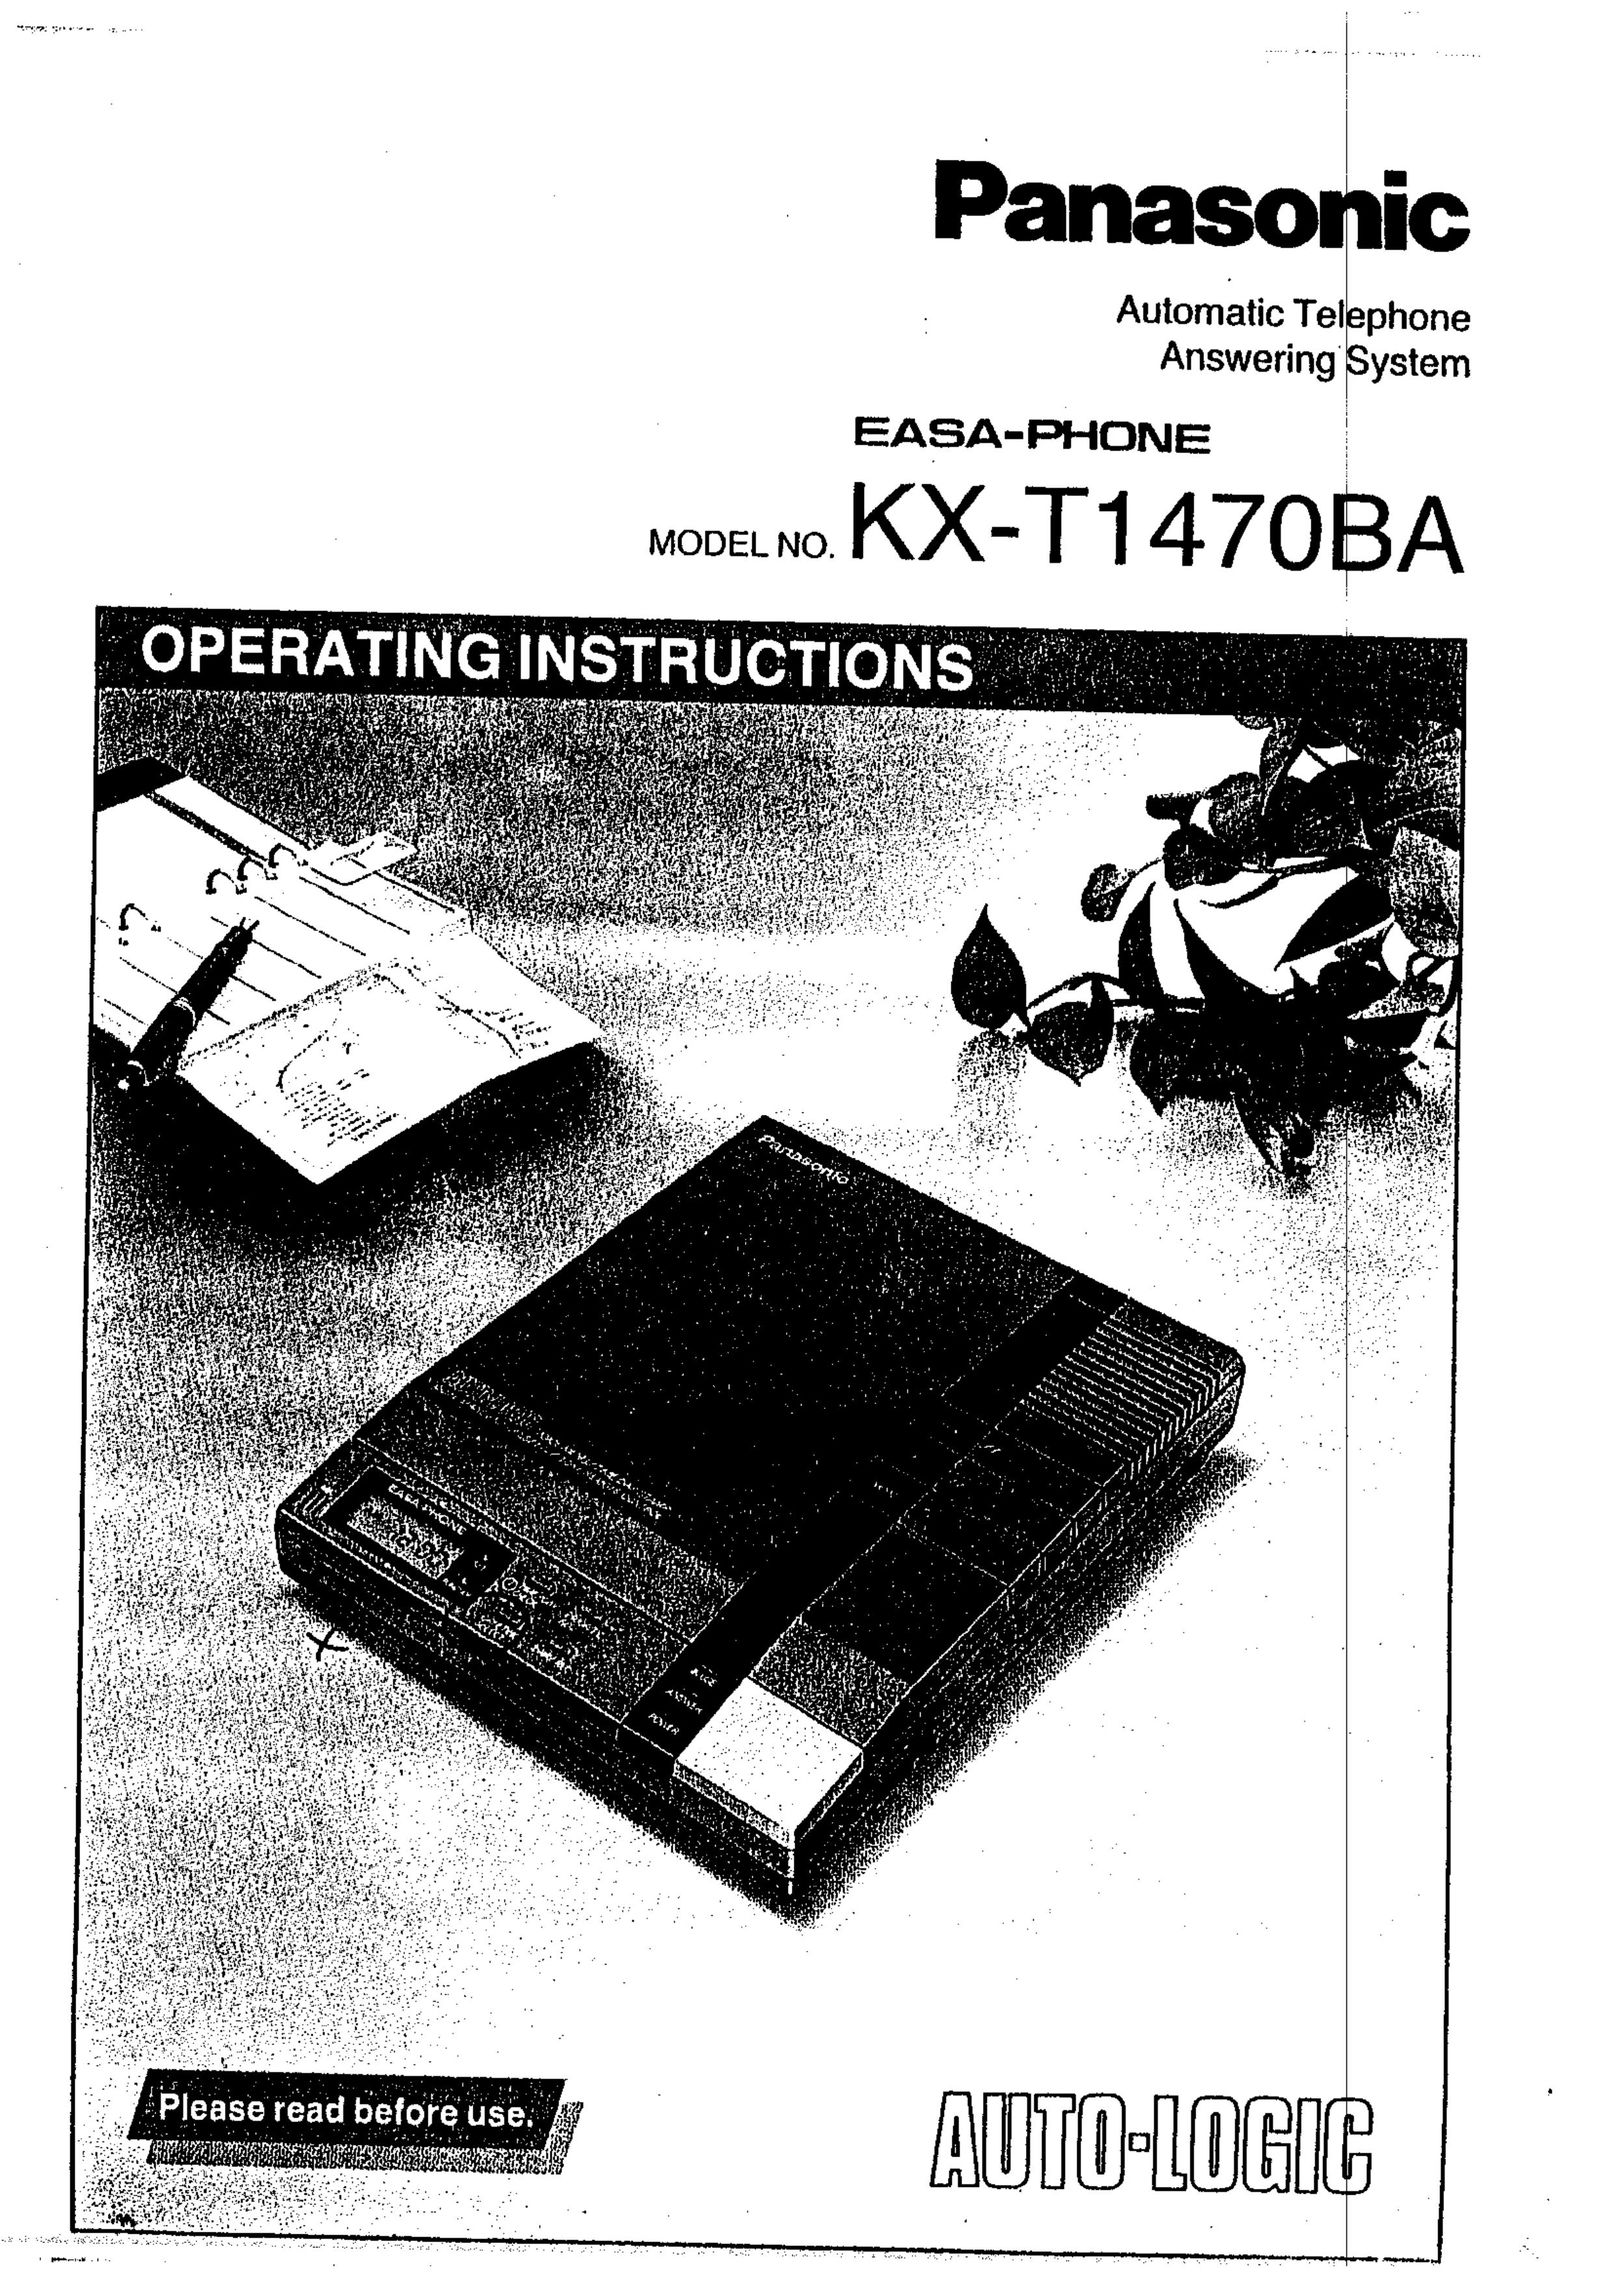 Panasonic KX-T1470BA Answering Machine User Manual